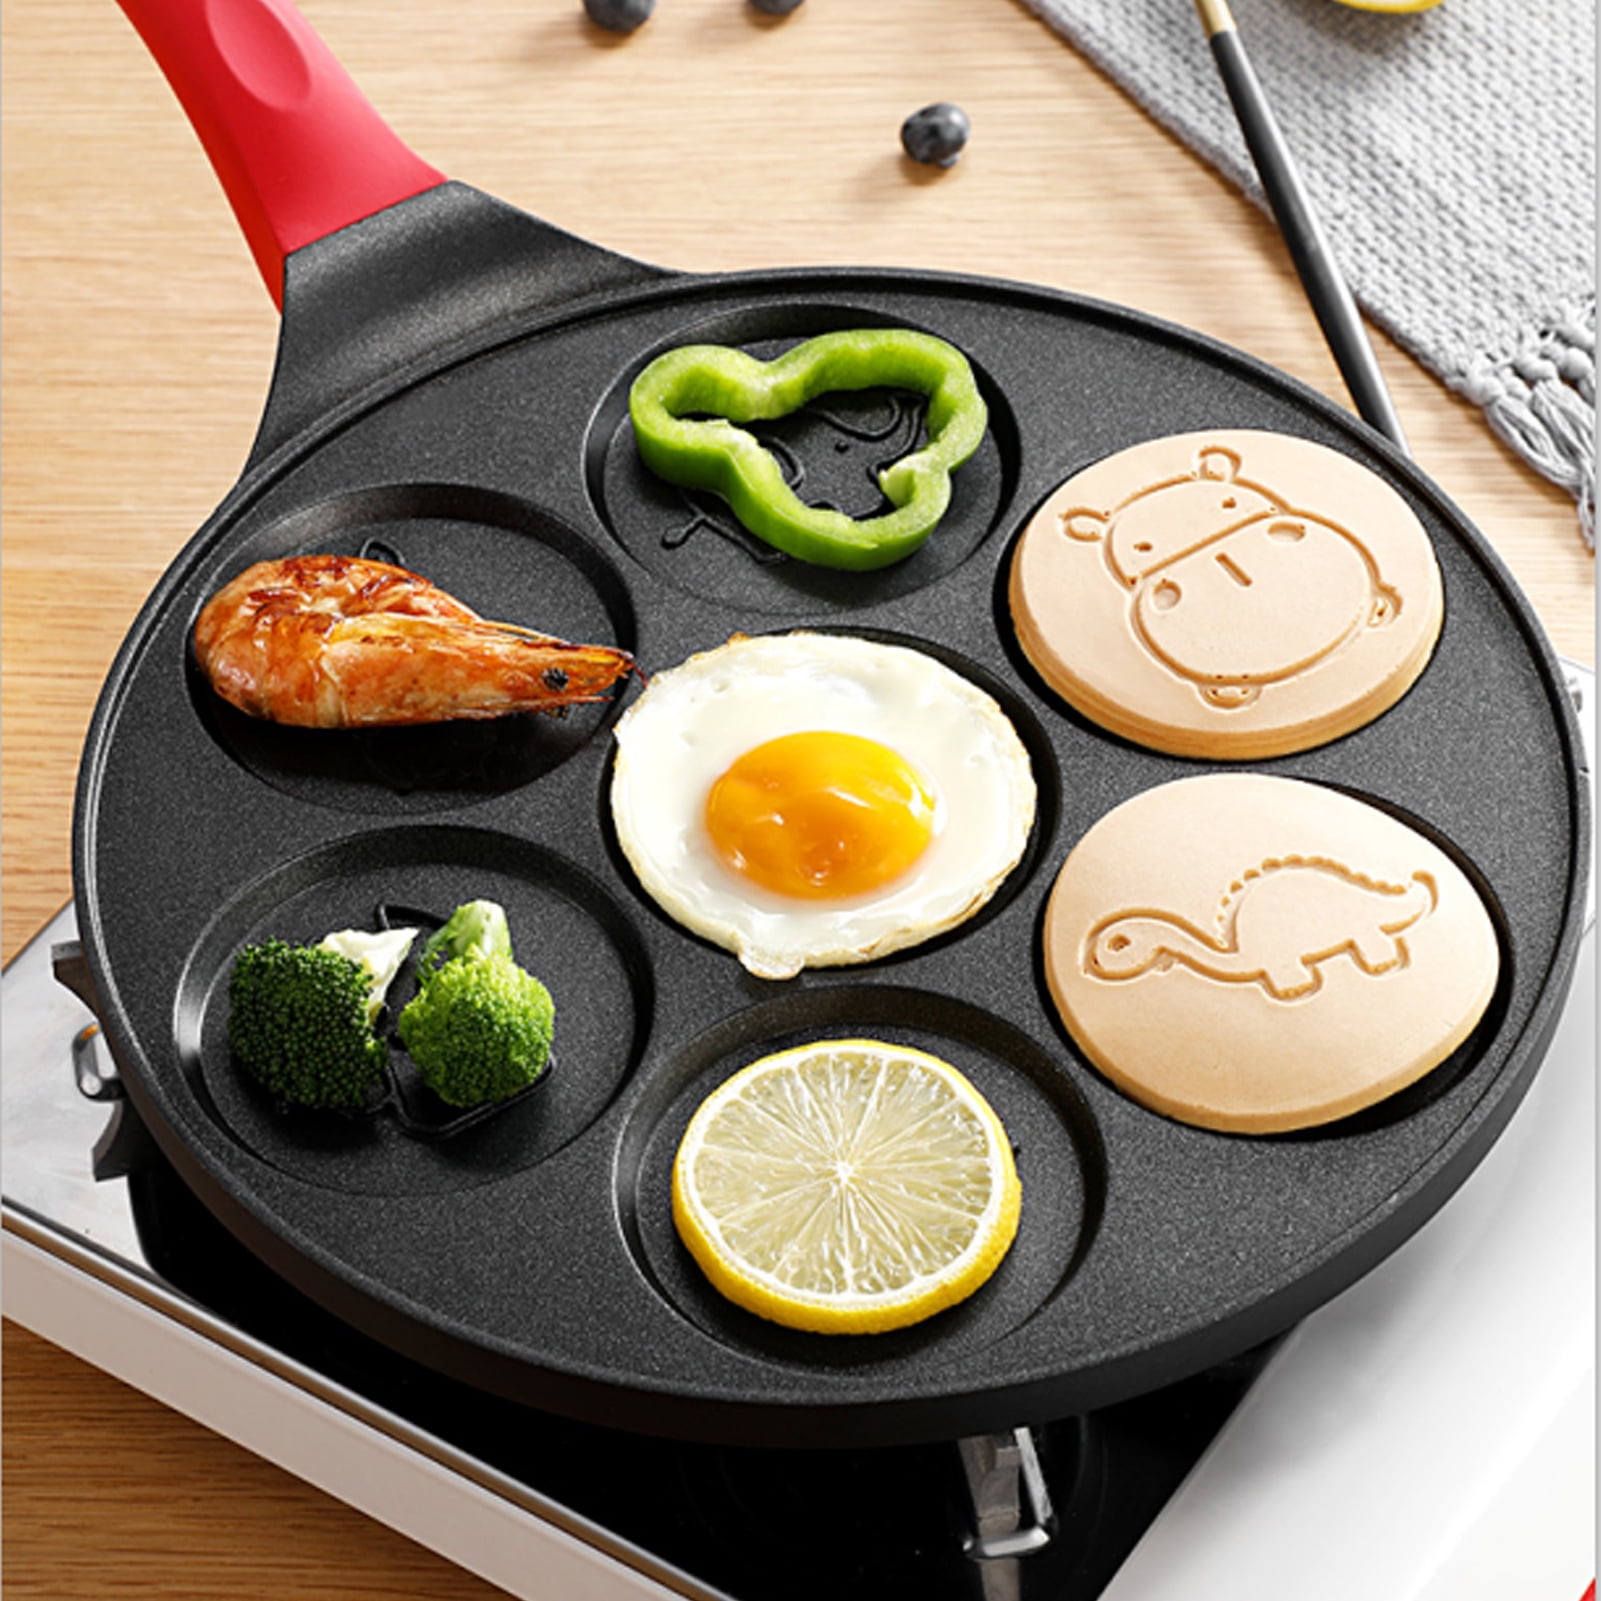  ANLIN Non stick Omelet Maker Egg Pan Flip Perfect Breakfast  Eggs Omelette Pan Family Kitchen Tool Use: Home & Kitchen